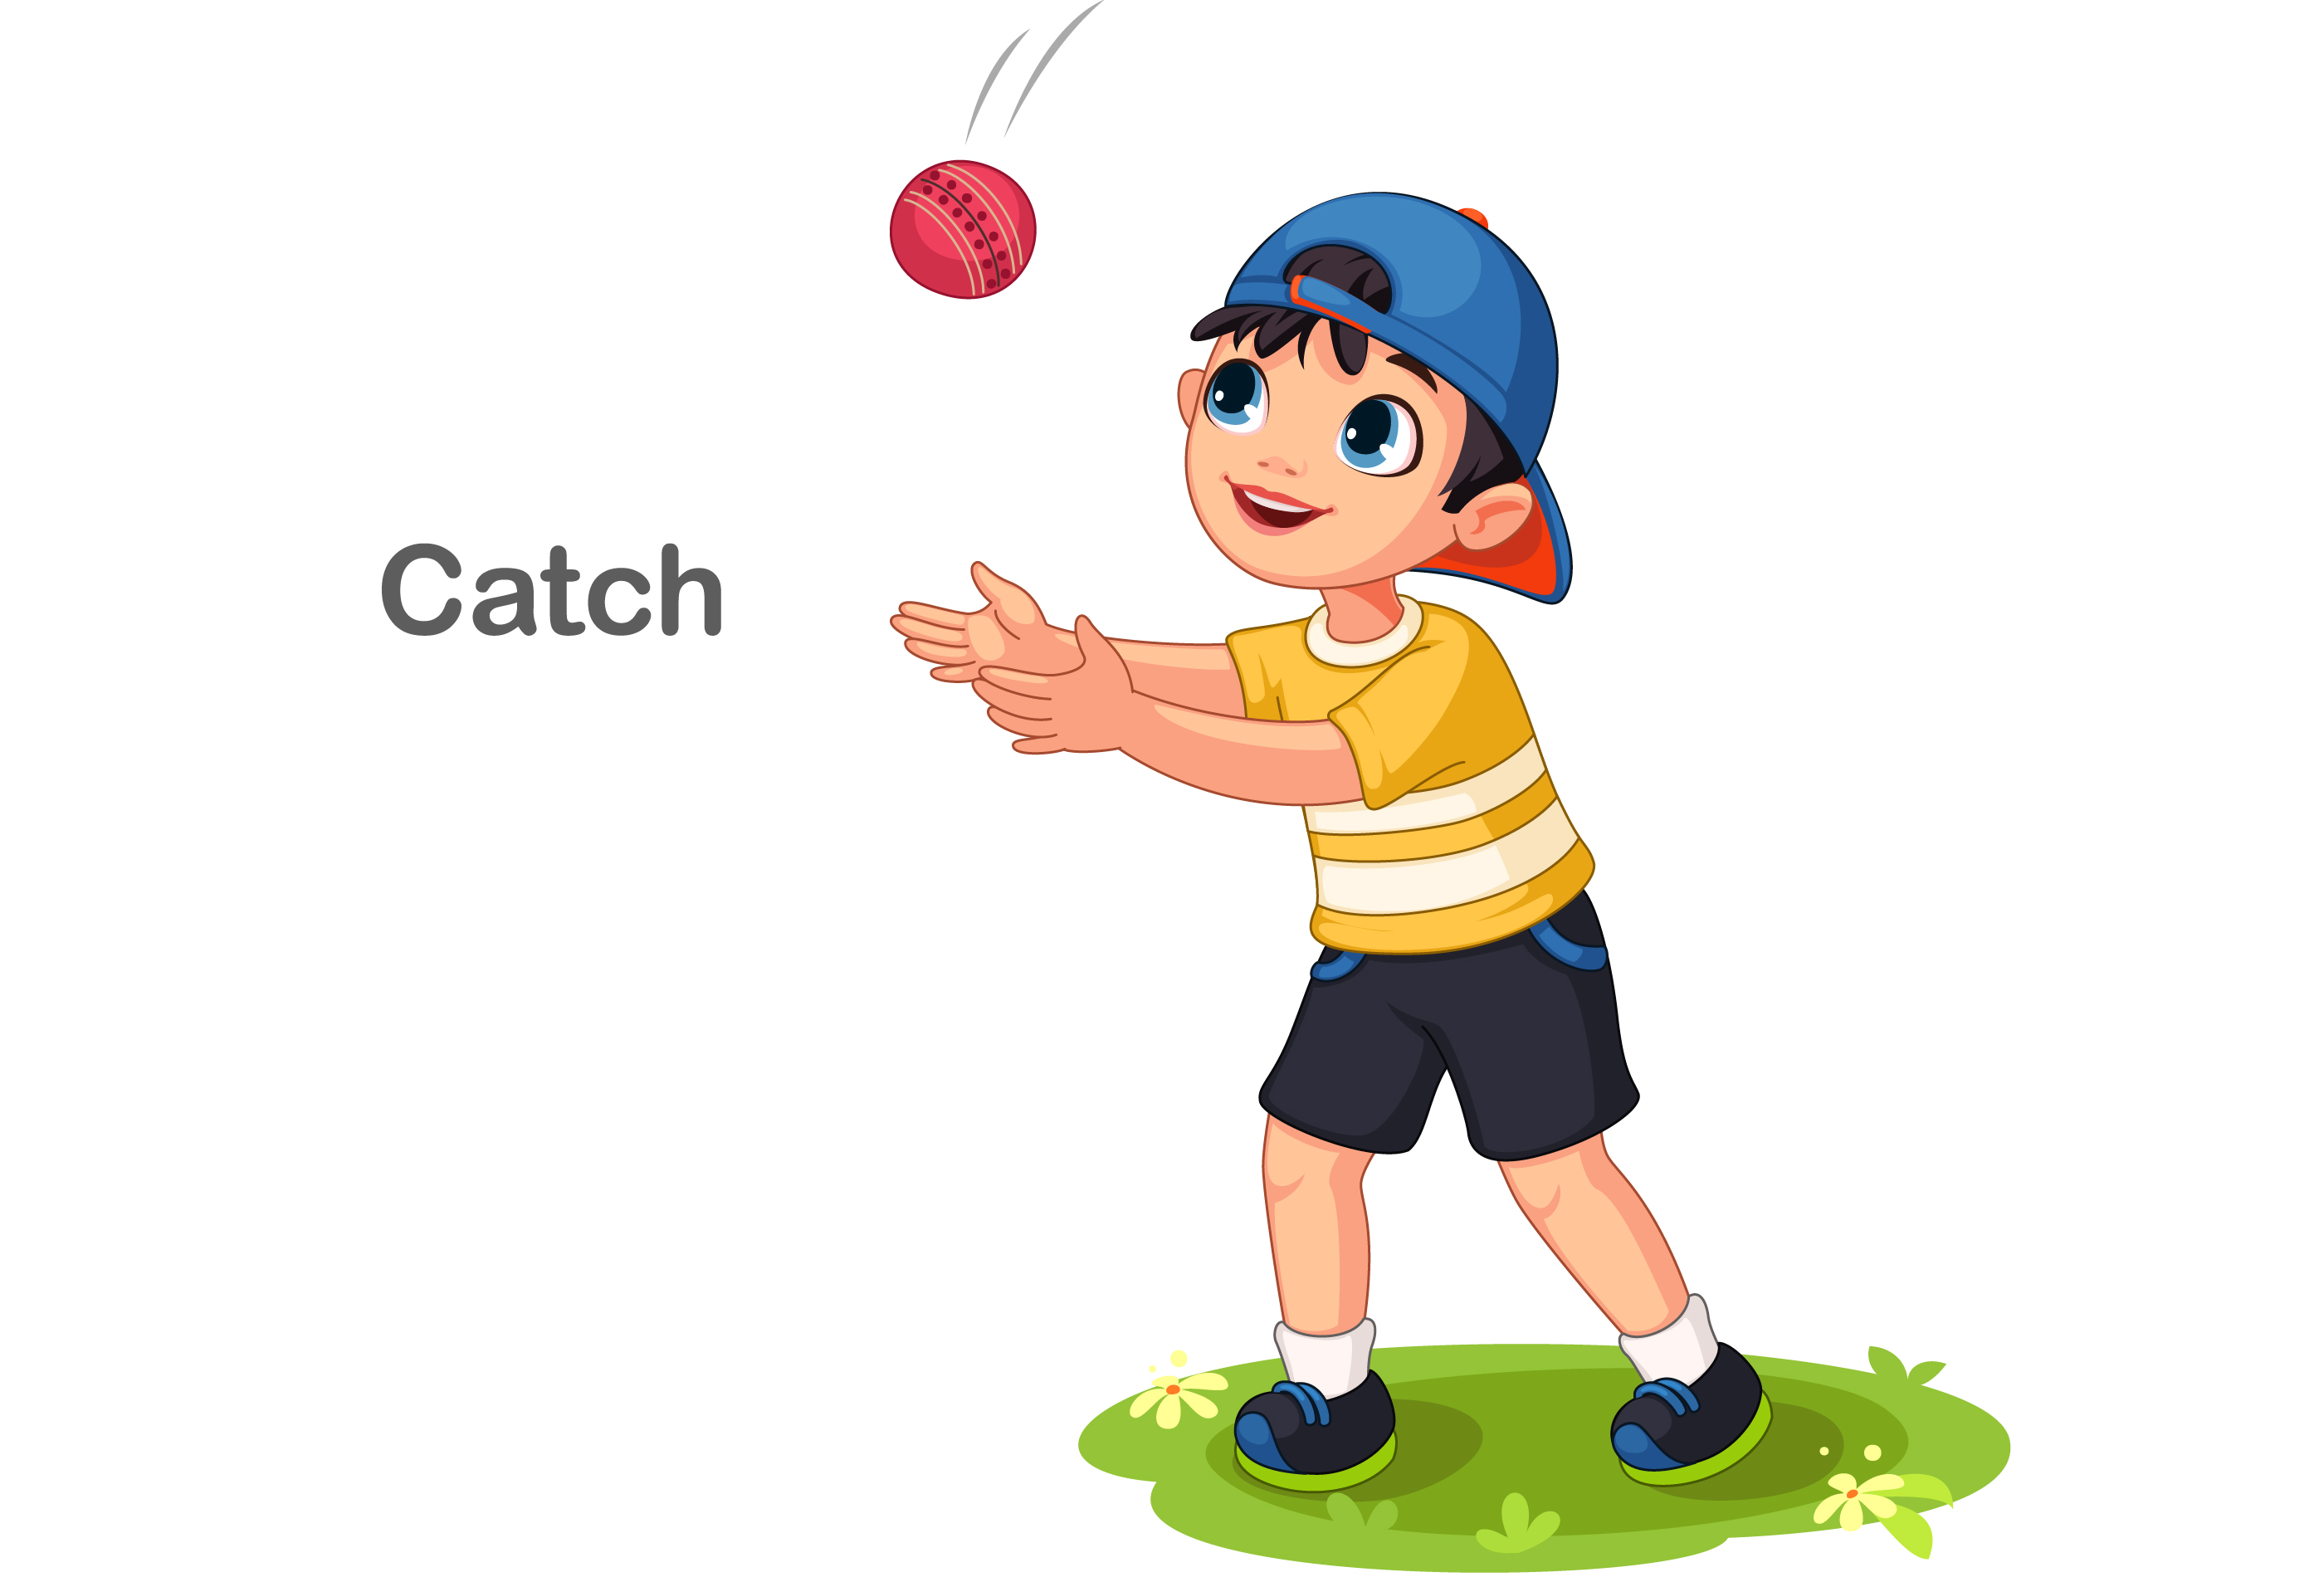 He can catch. Мальчик ловит мяч. Catch рисунок. Мальчик поймал мяч. Catch the Ball Flashcard.